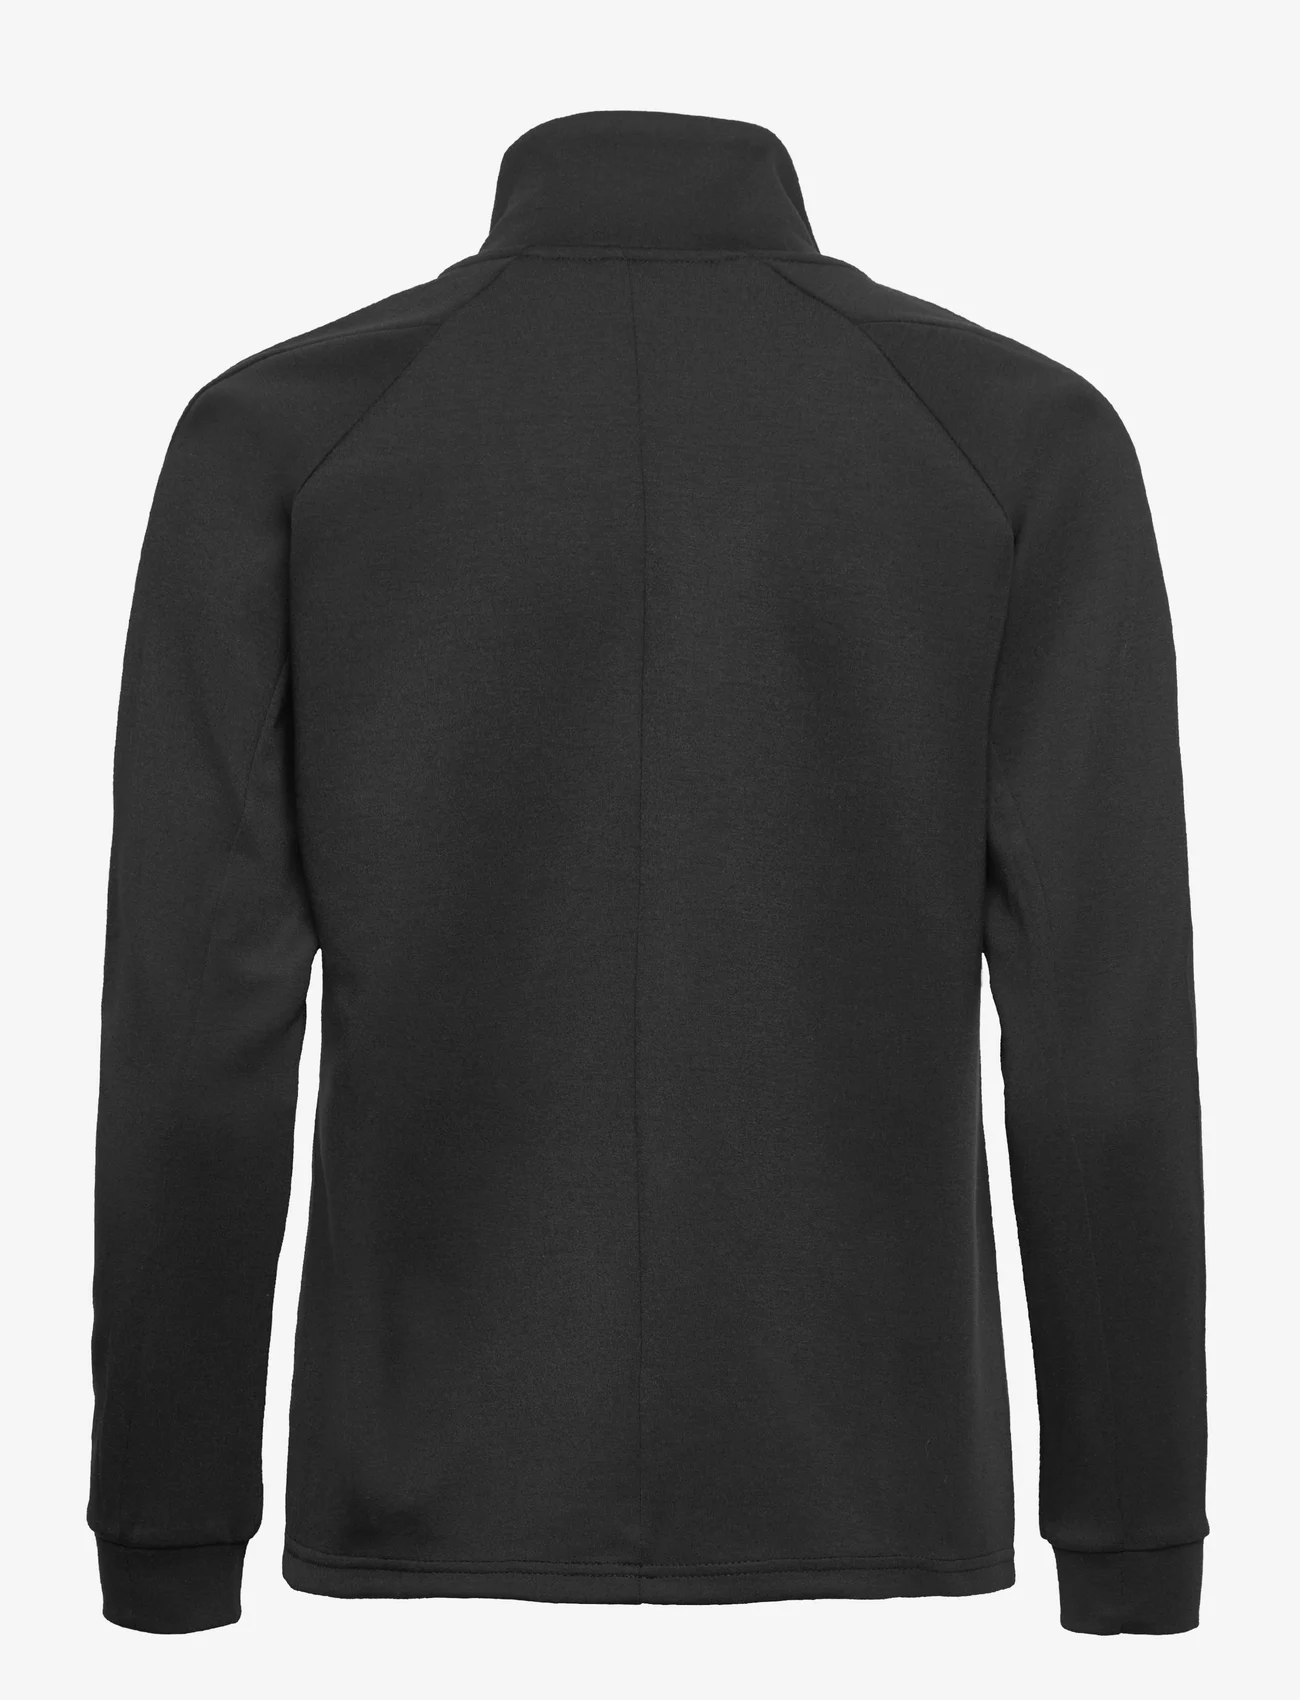 Hummel - hmlESSI ZIP JACKET - sweatshirts - black - 1